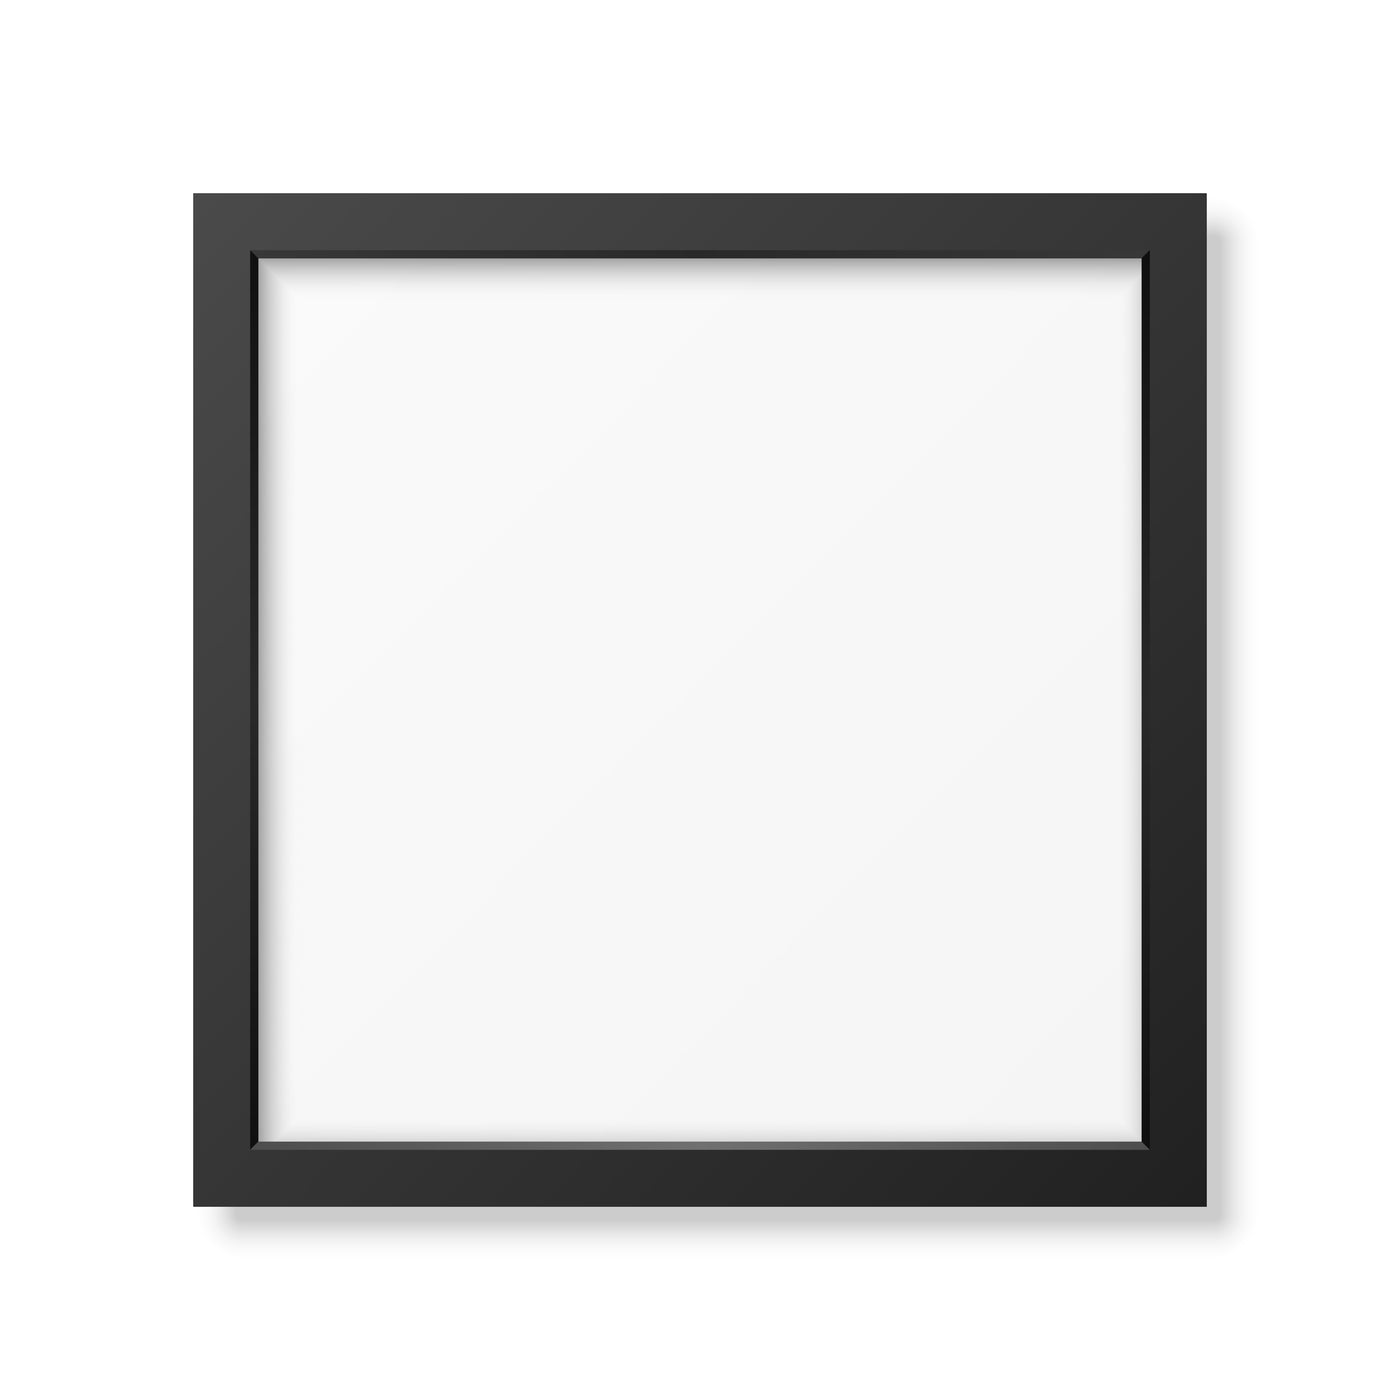 Square photo frame